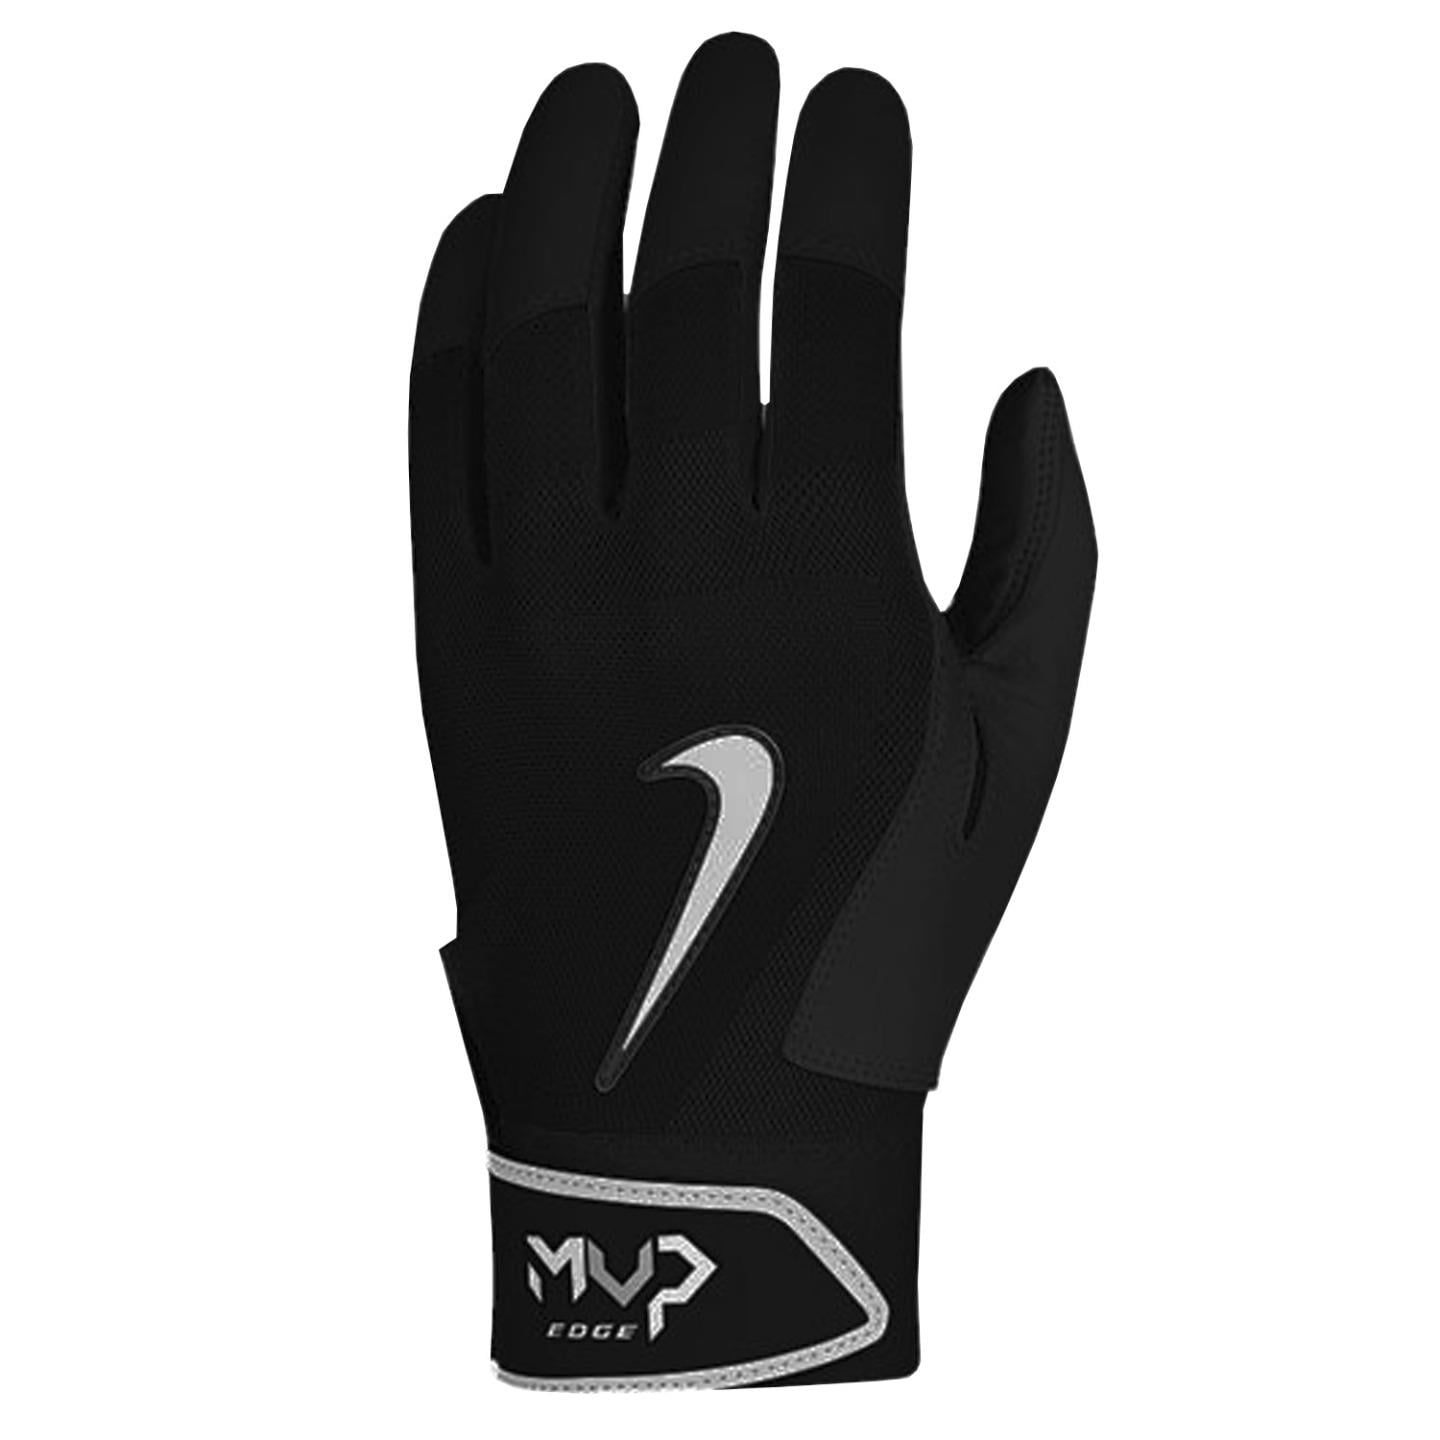 Nike MVP Edge Men's Batting Gloves Black Large - Walmart.com